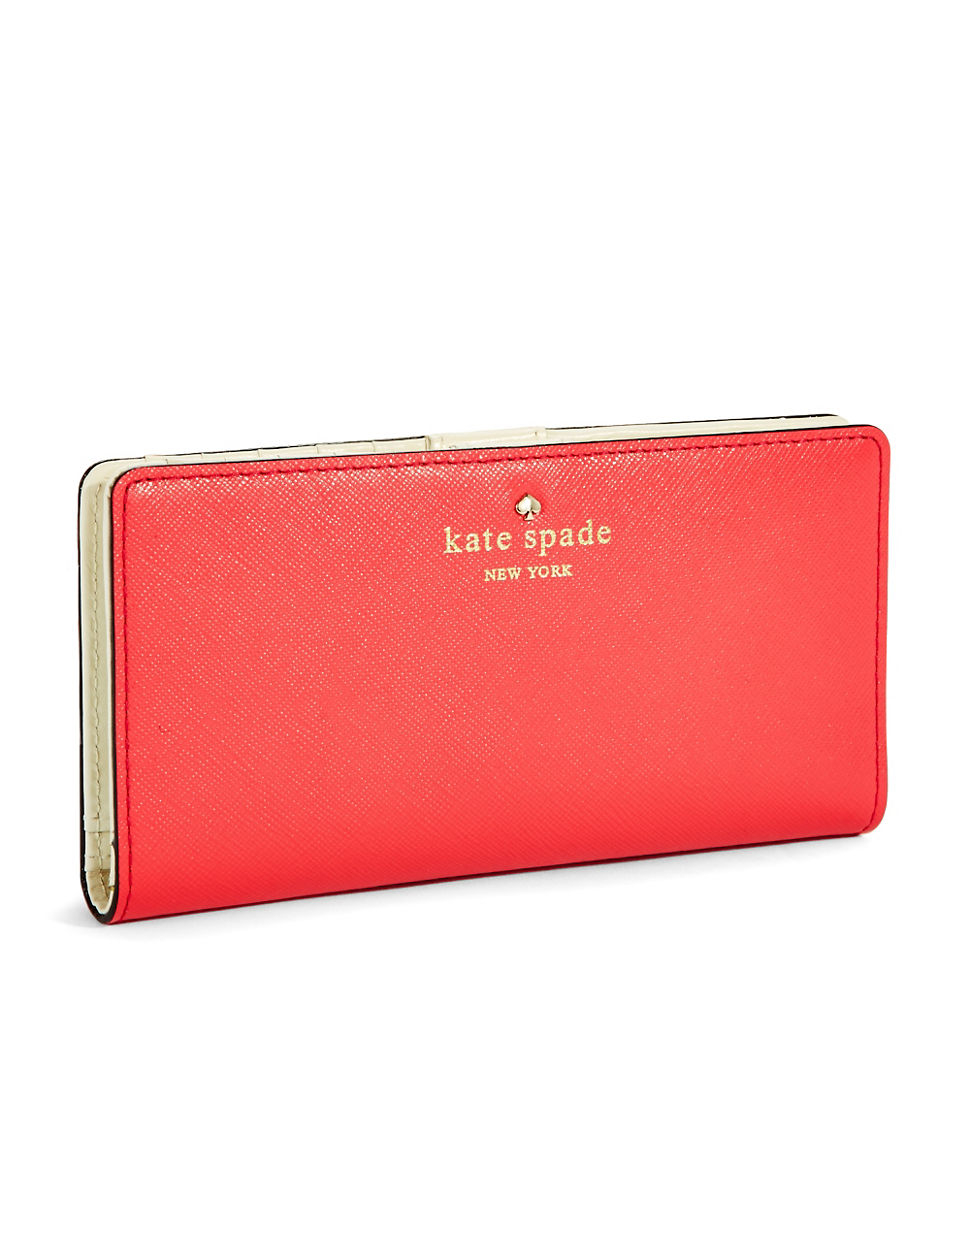 Kate Spade Cherry Lane Stacey Leather Wallet in Red (Dark Geranium) | Lyst